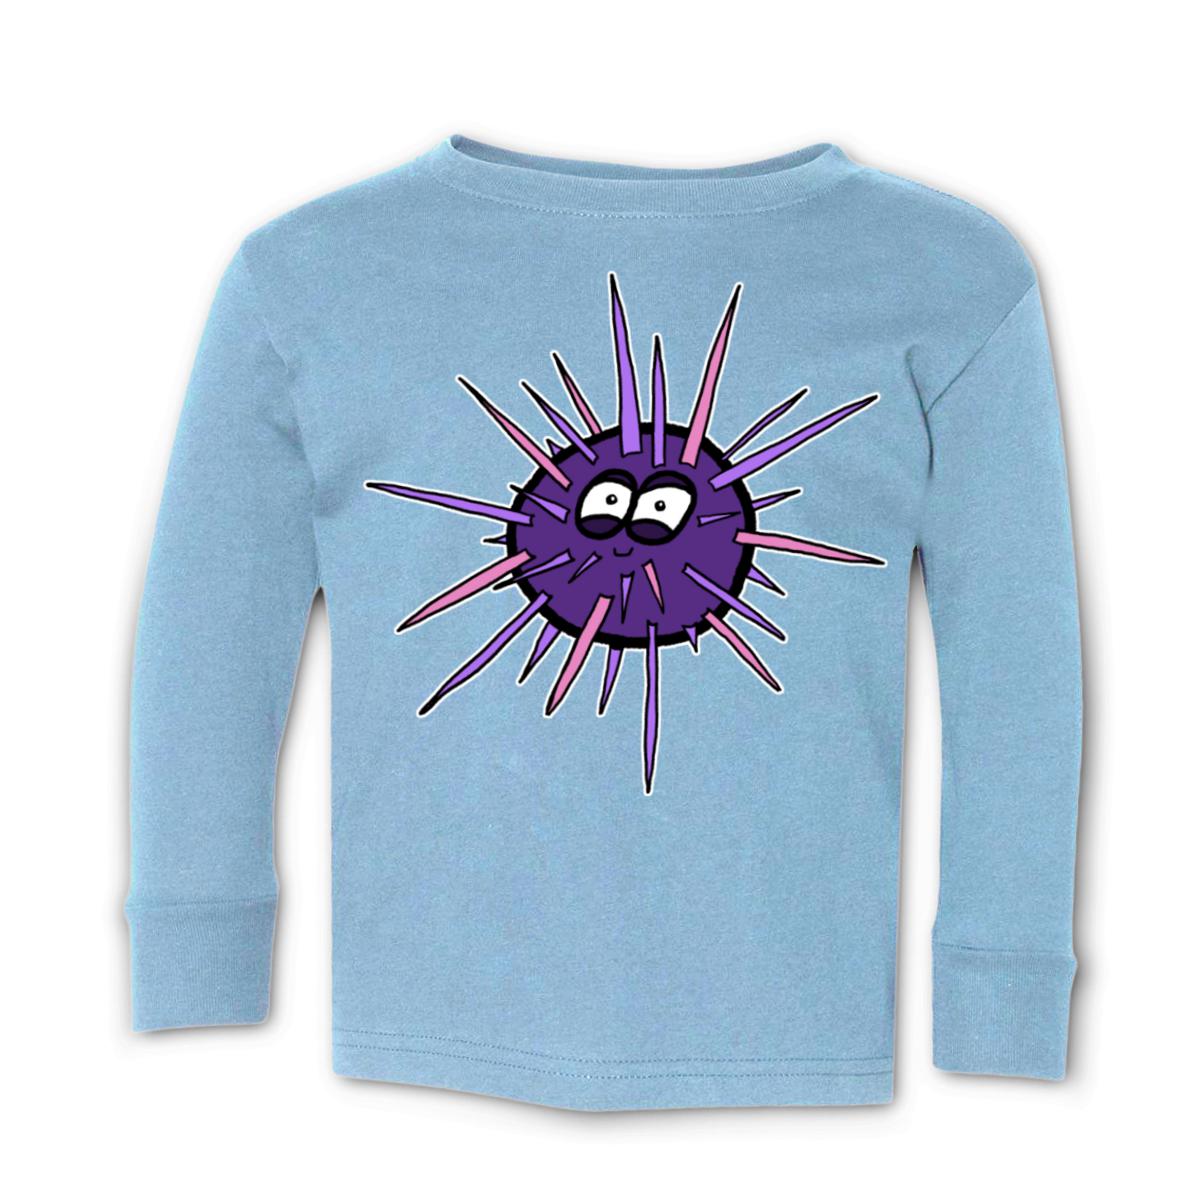 Sea Urchin Kid's Long Sleeve Tee Small light-blue